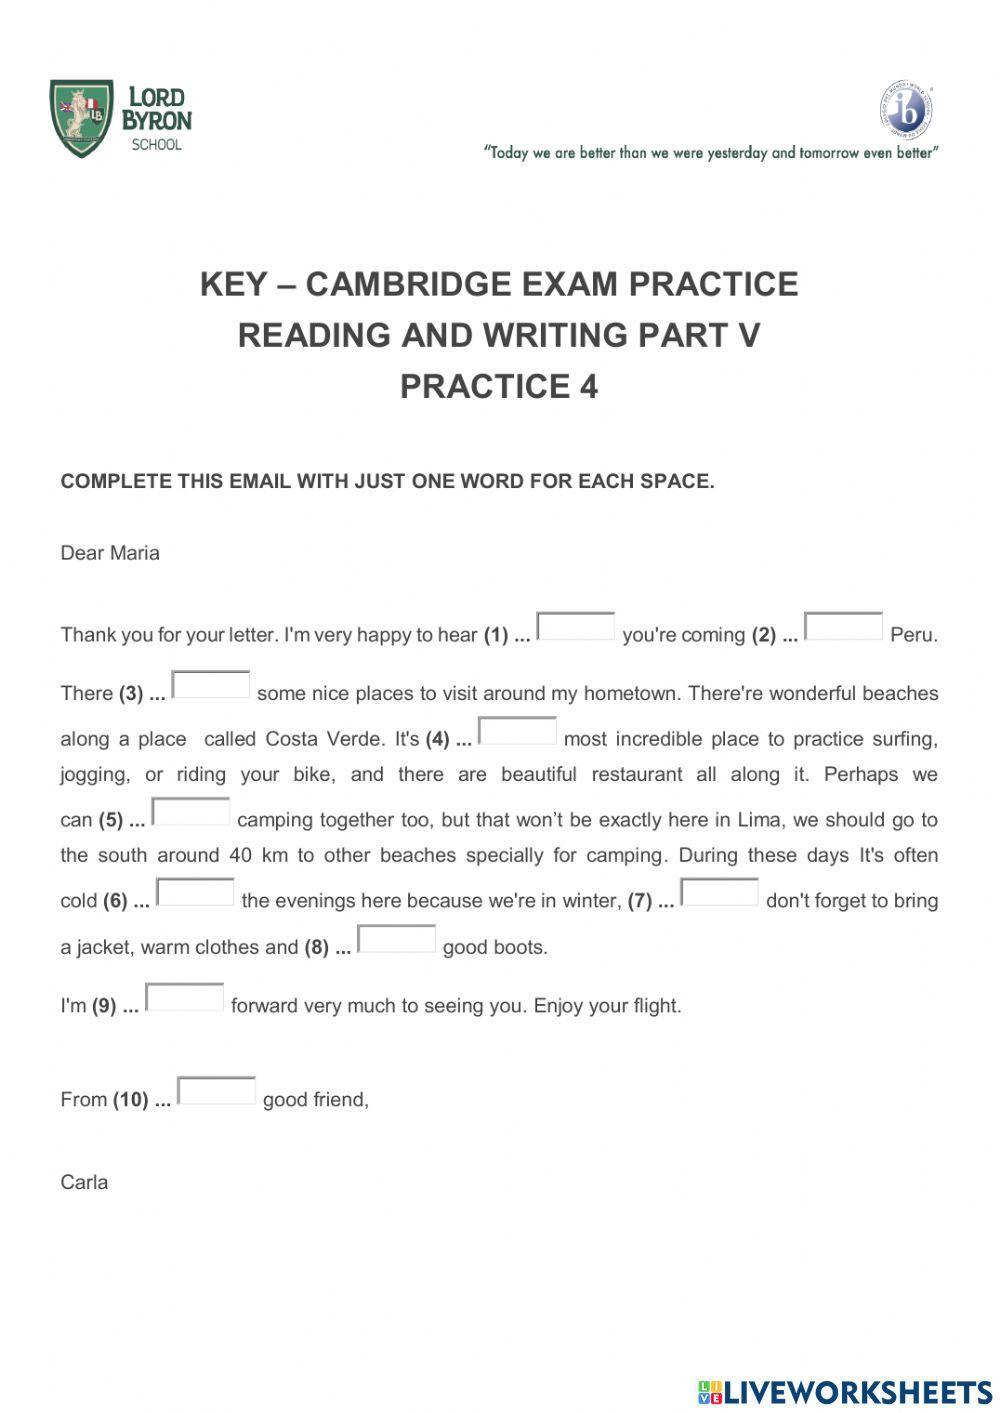 Key exam practice reading part v